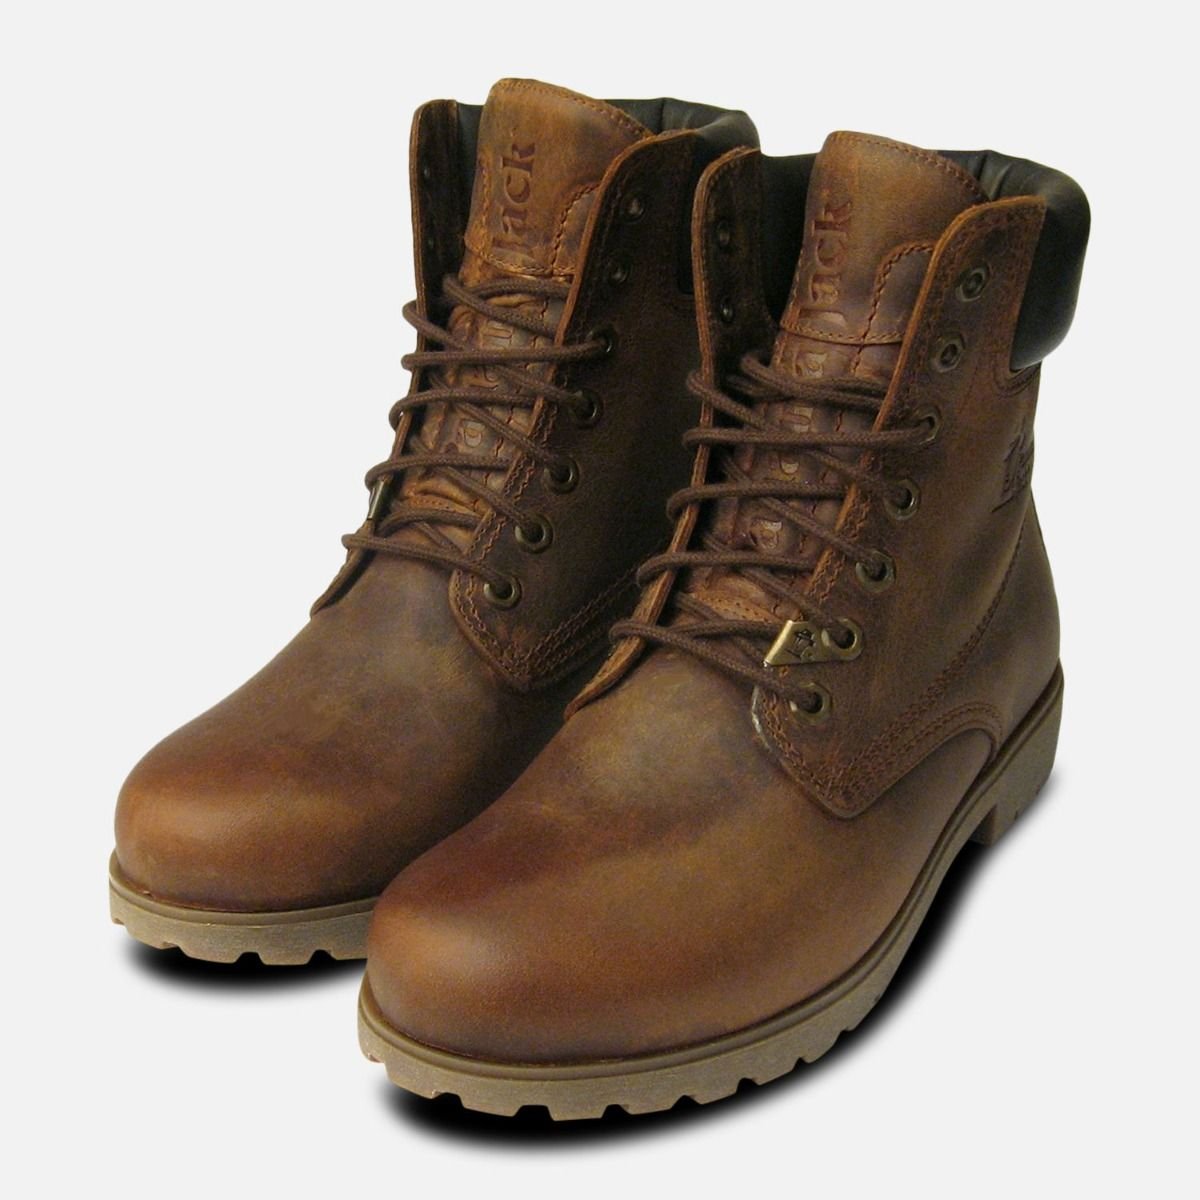 panama-jack-03-c8-bark-dark-brown-lace-up-boots-men-1.jpg